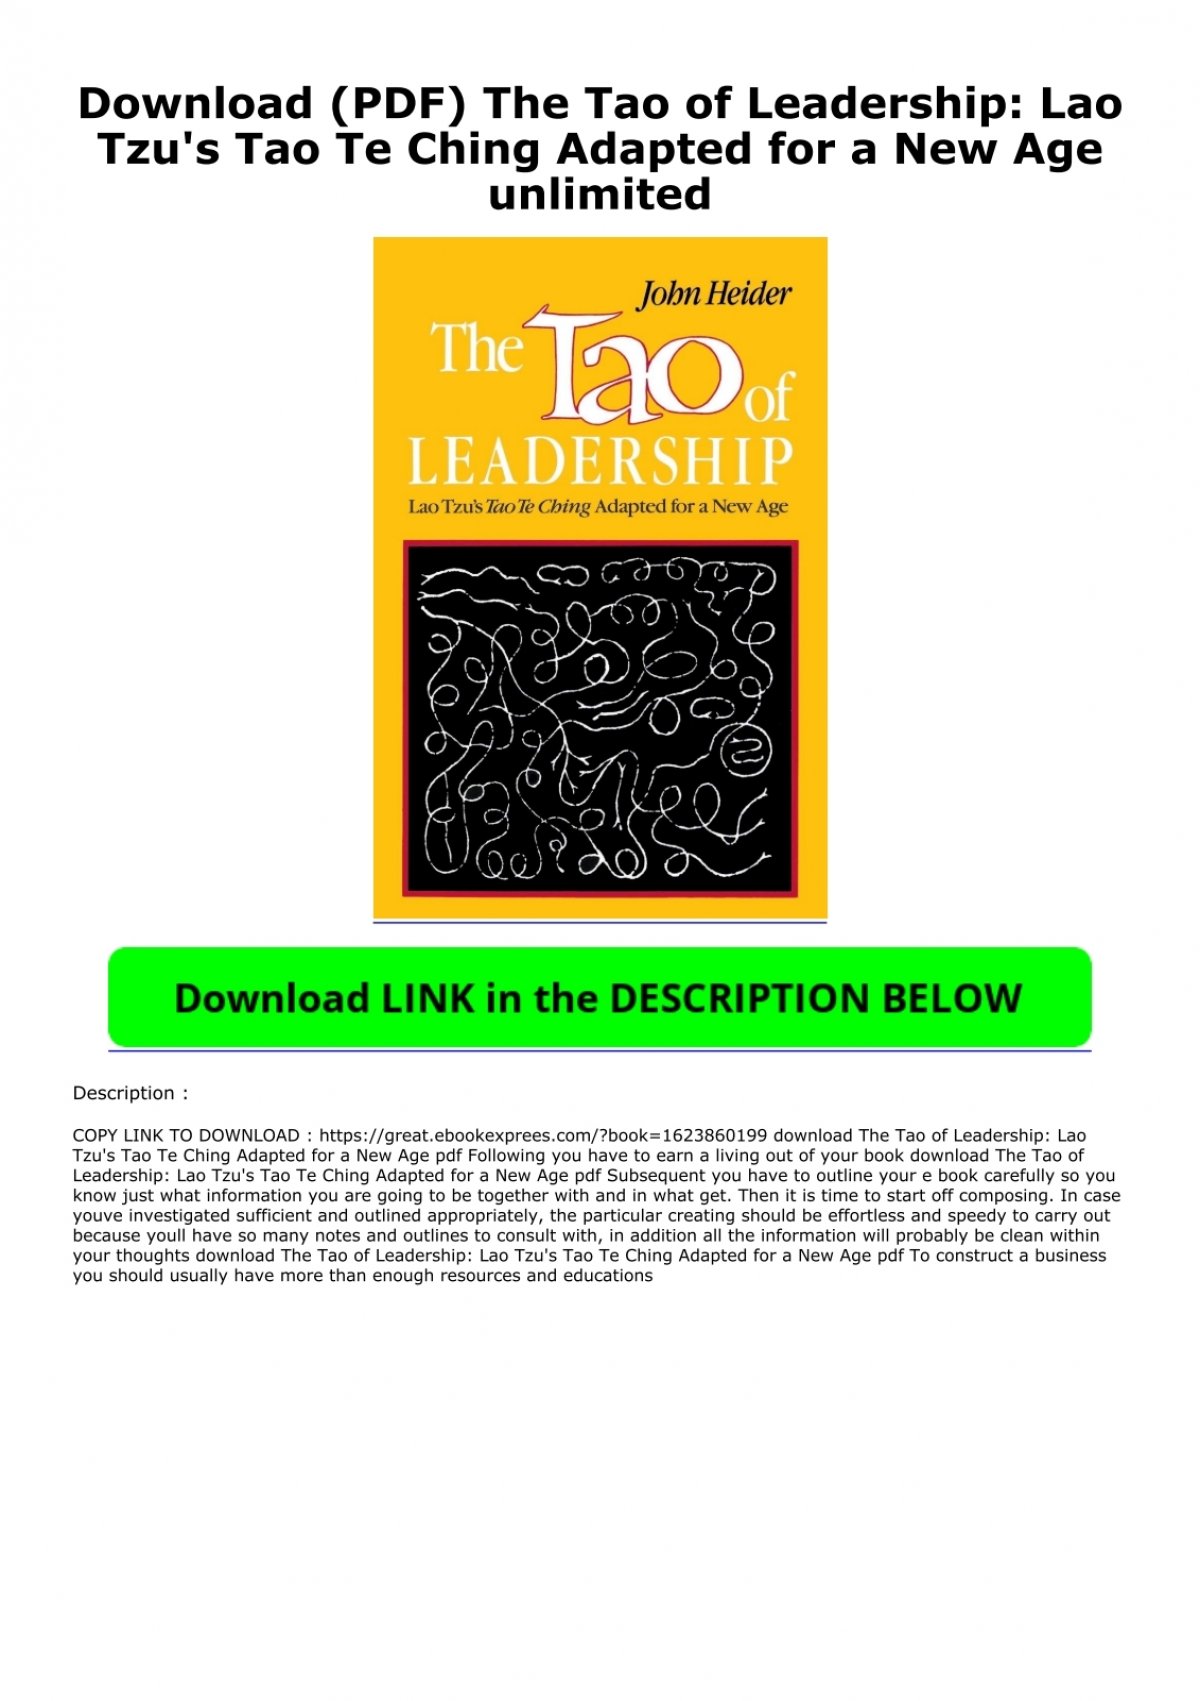 Download (PDF) The Tao of Leadership: Lao Tzu's Tao Te Ching